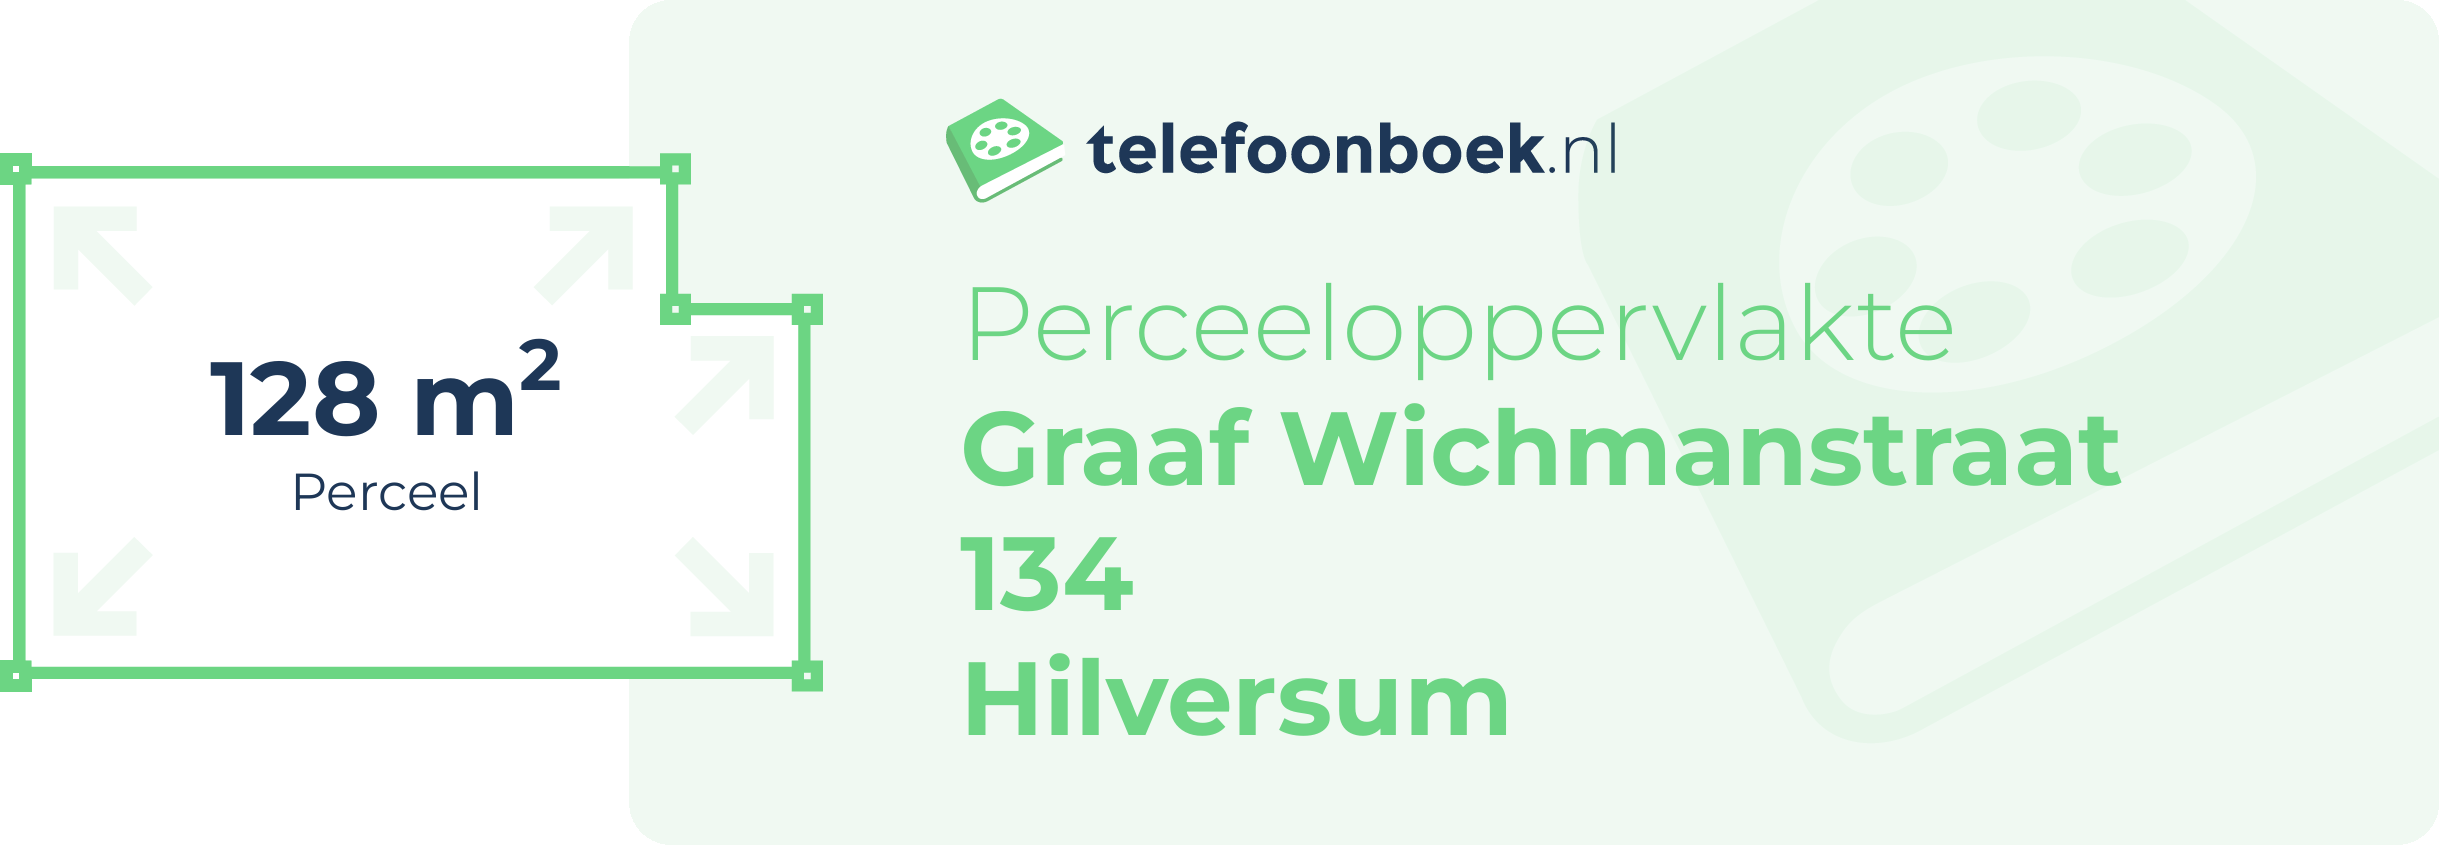 Perceeloppervlakte Graaf Wichmanstraat 134 Hilversum